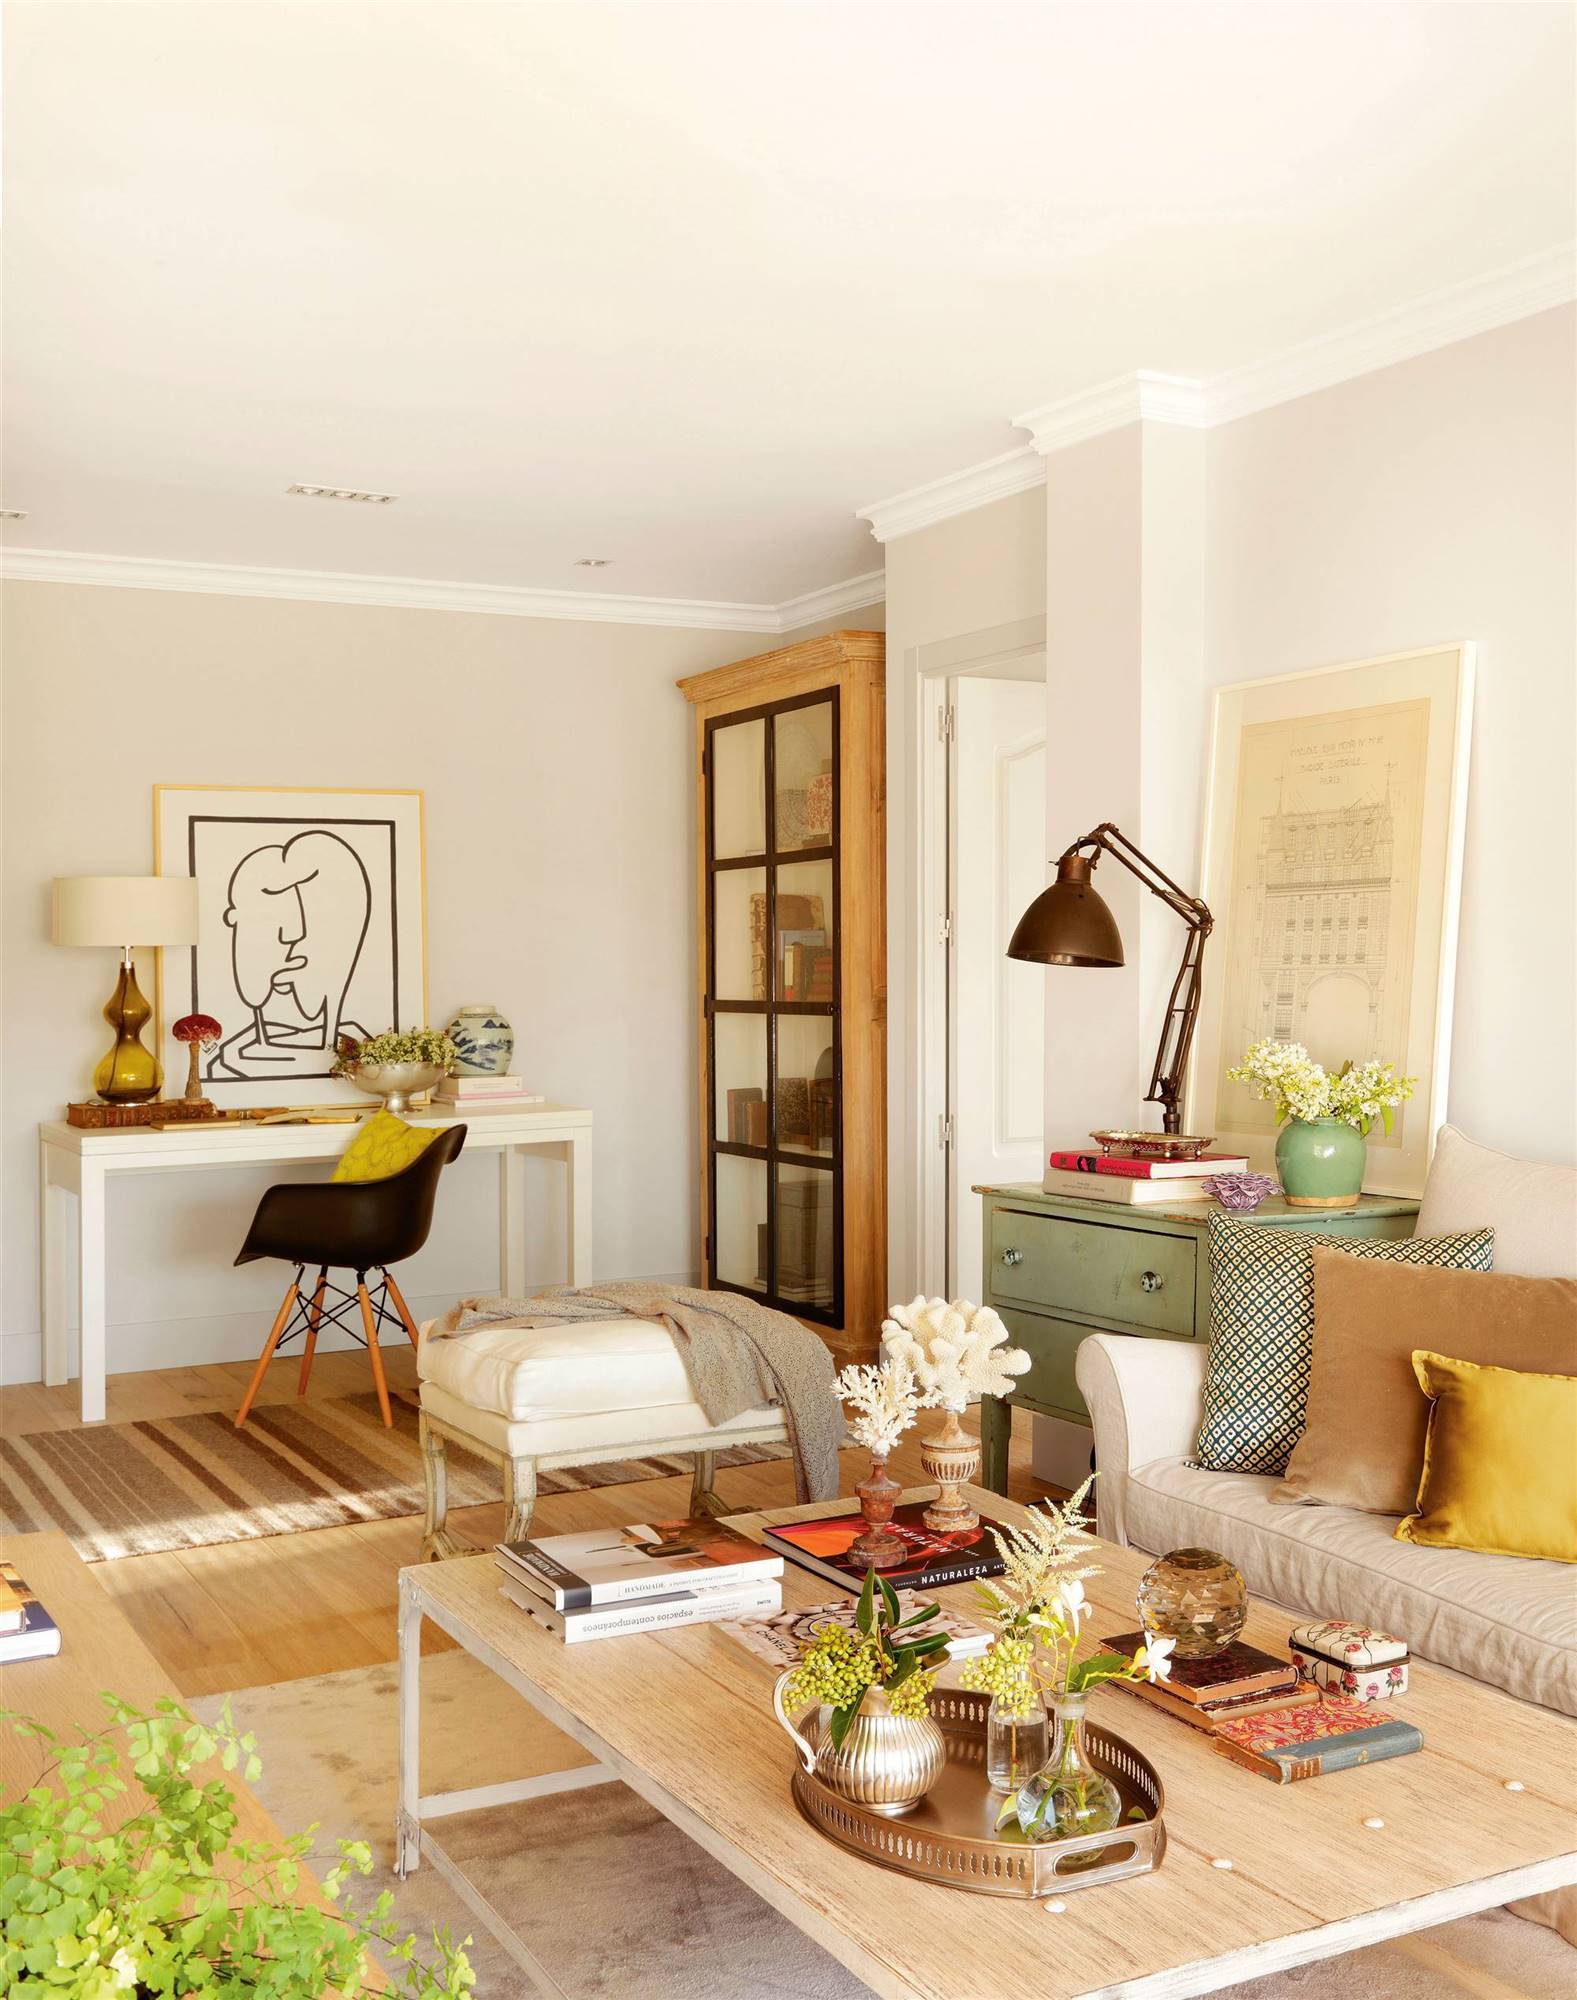 salon con mesa de centro de madera sofa beige y vitrina de madera_00355571